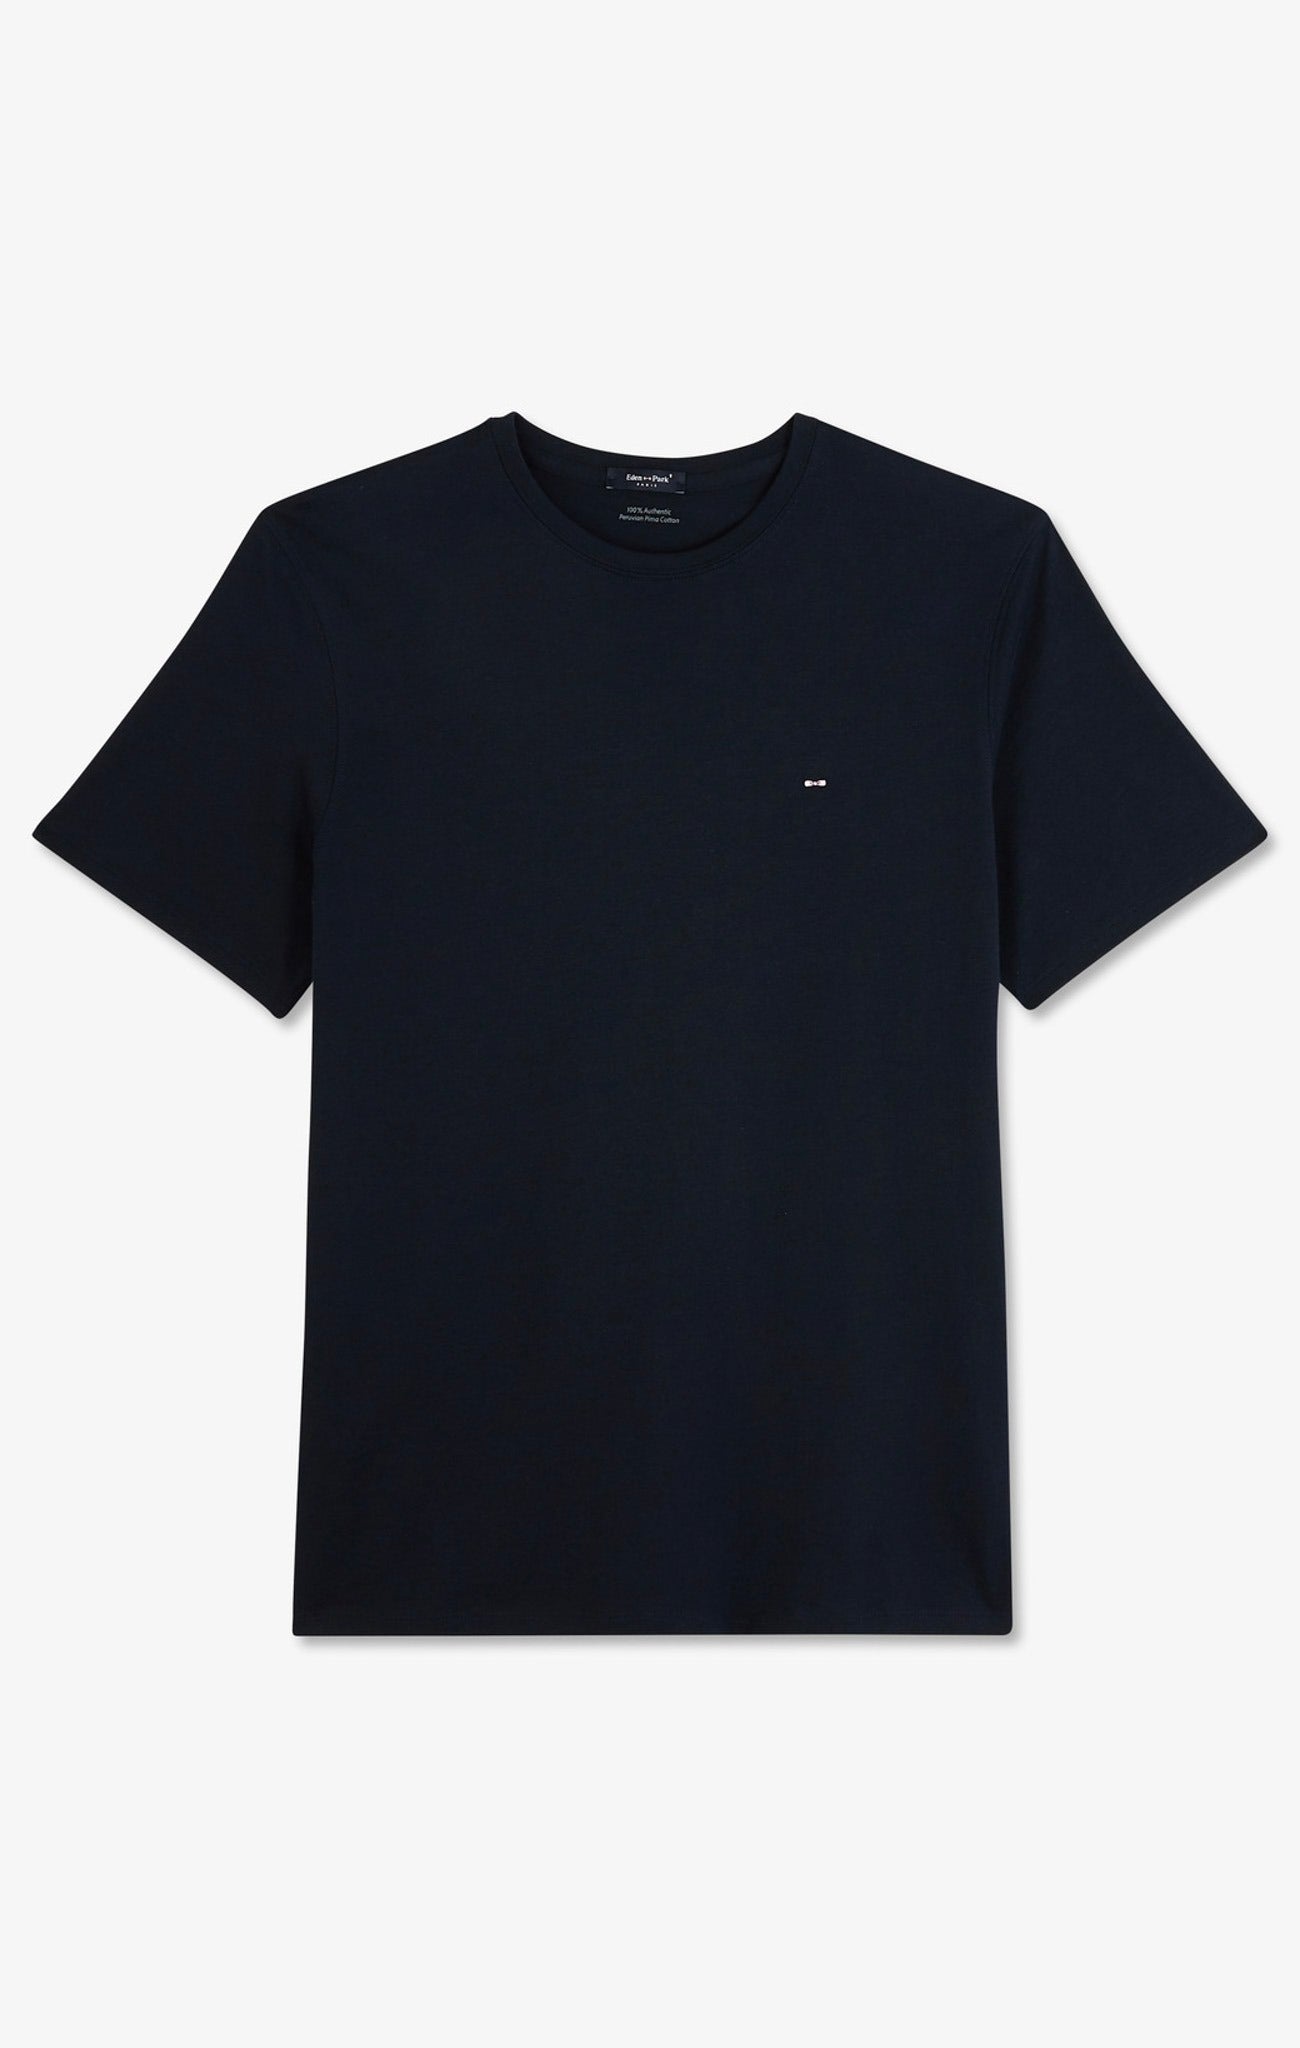 T-shirt bleu marine col rond à manches courtes